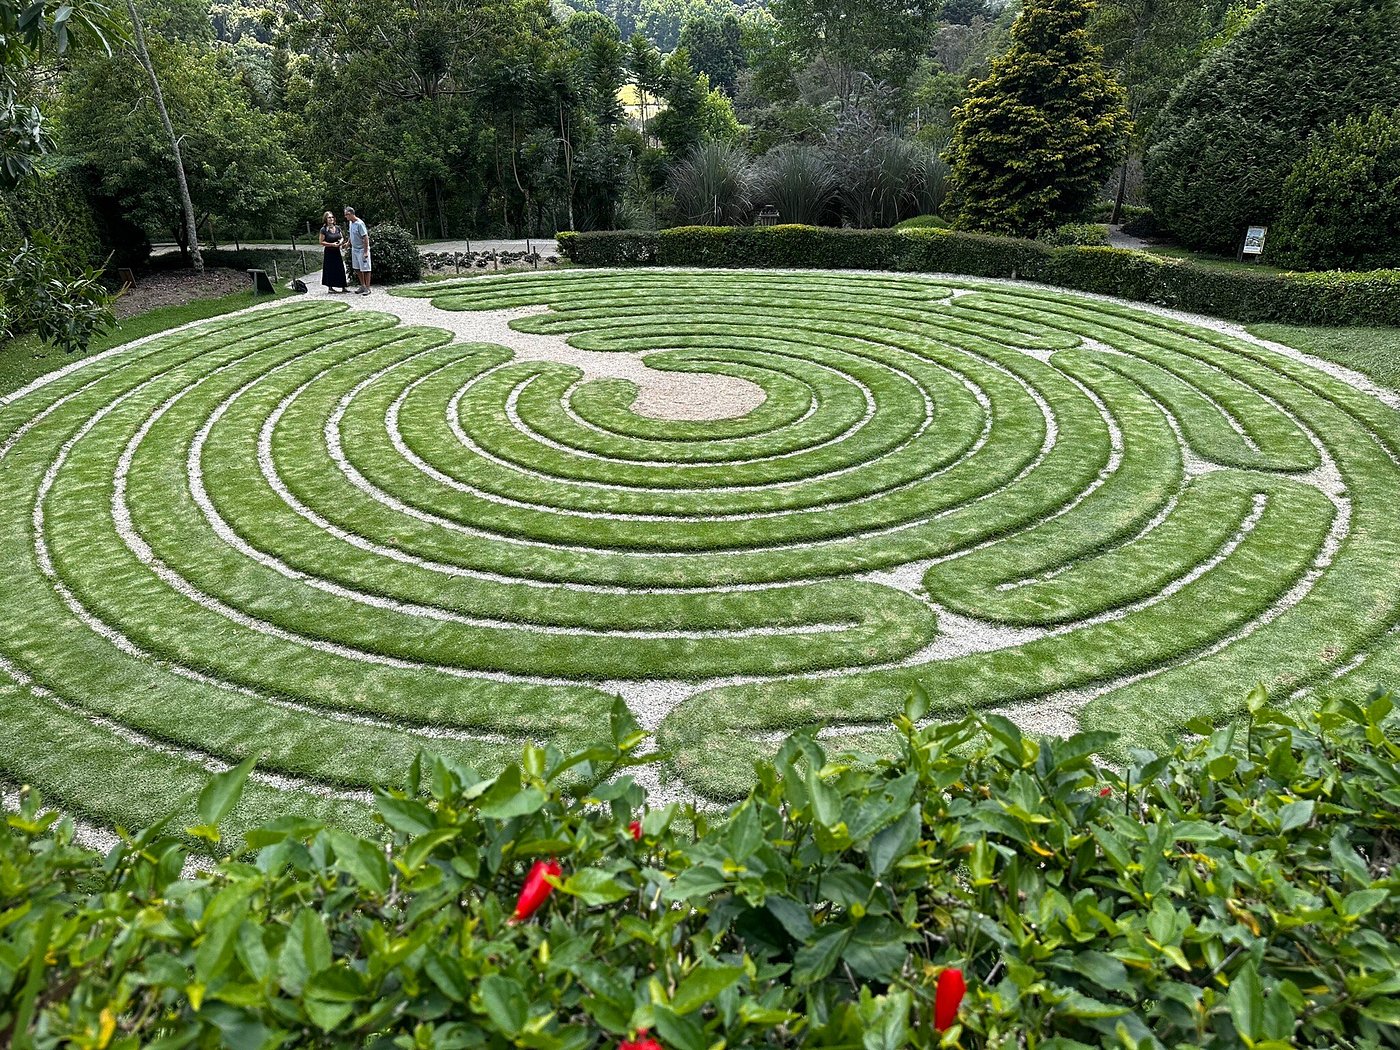 Grass maze, pathways partially trampled